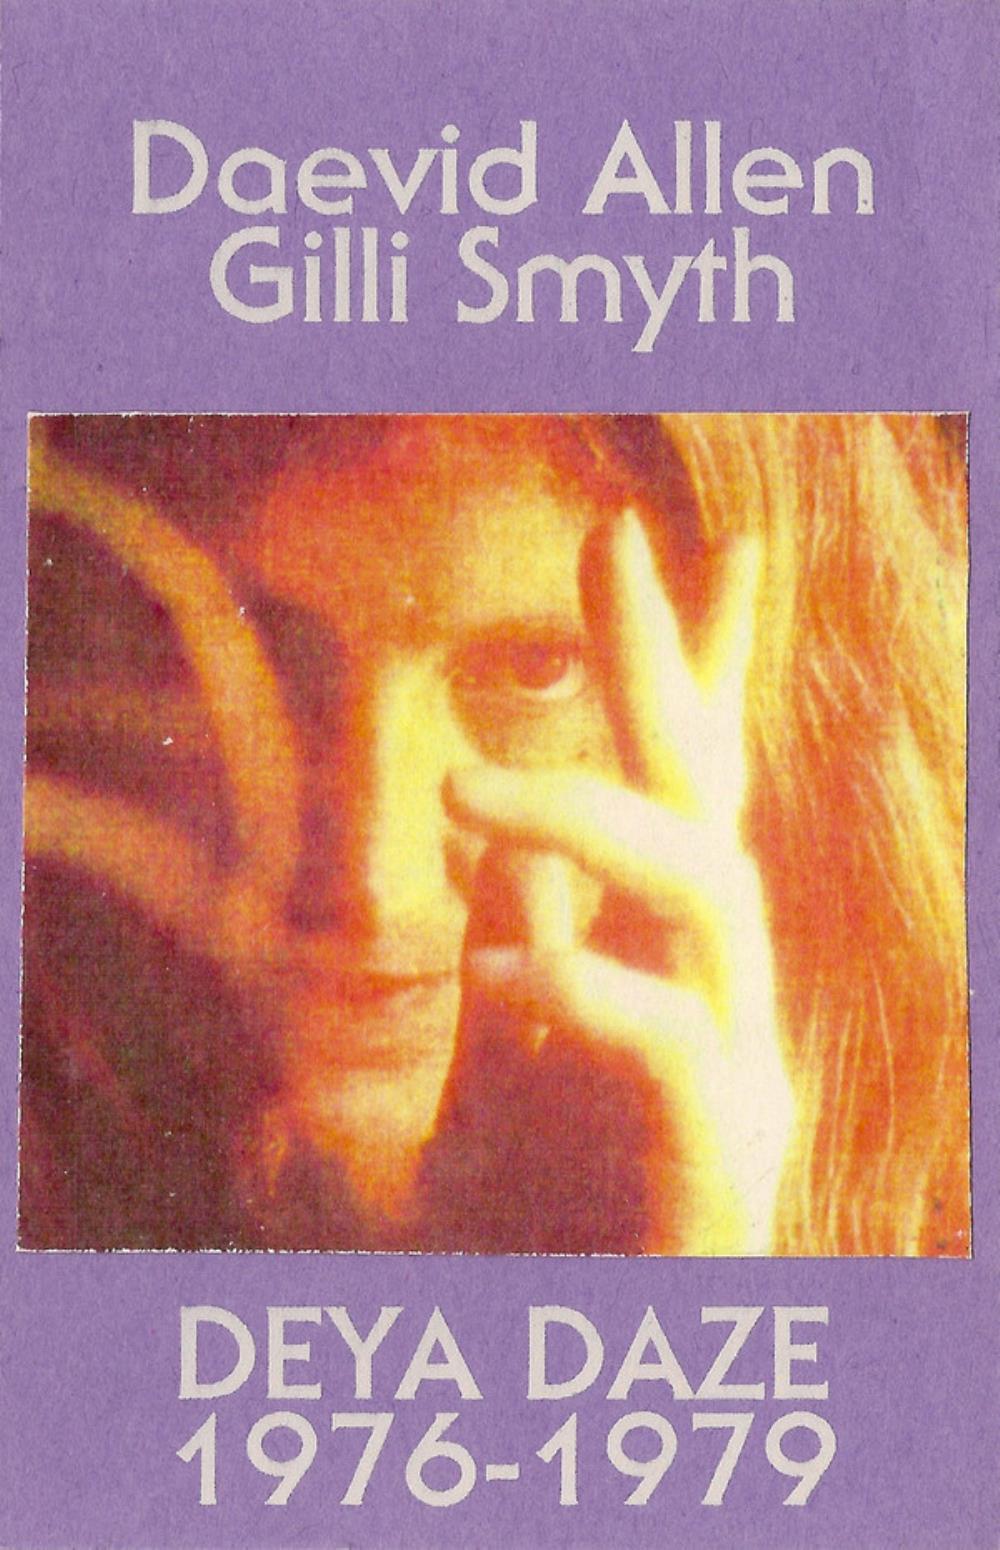 Daevid Allen - Daevid Allen & Gilli Smyth: Deya Daze 1976-1979 CD (album) cover